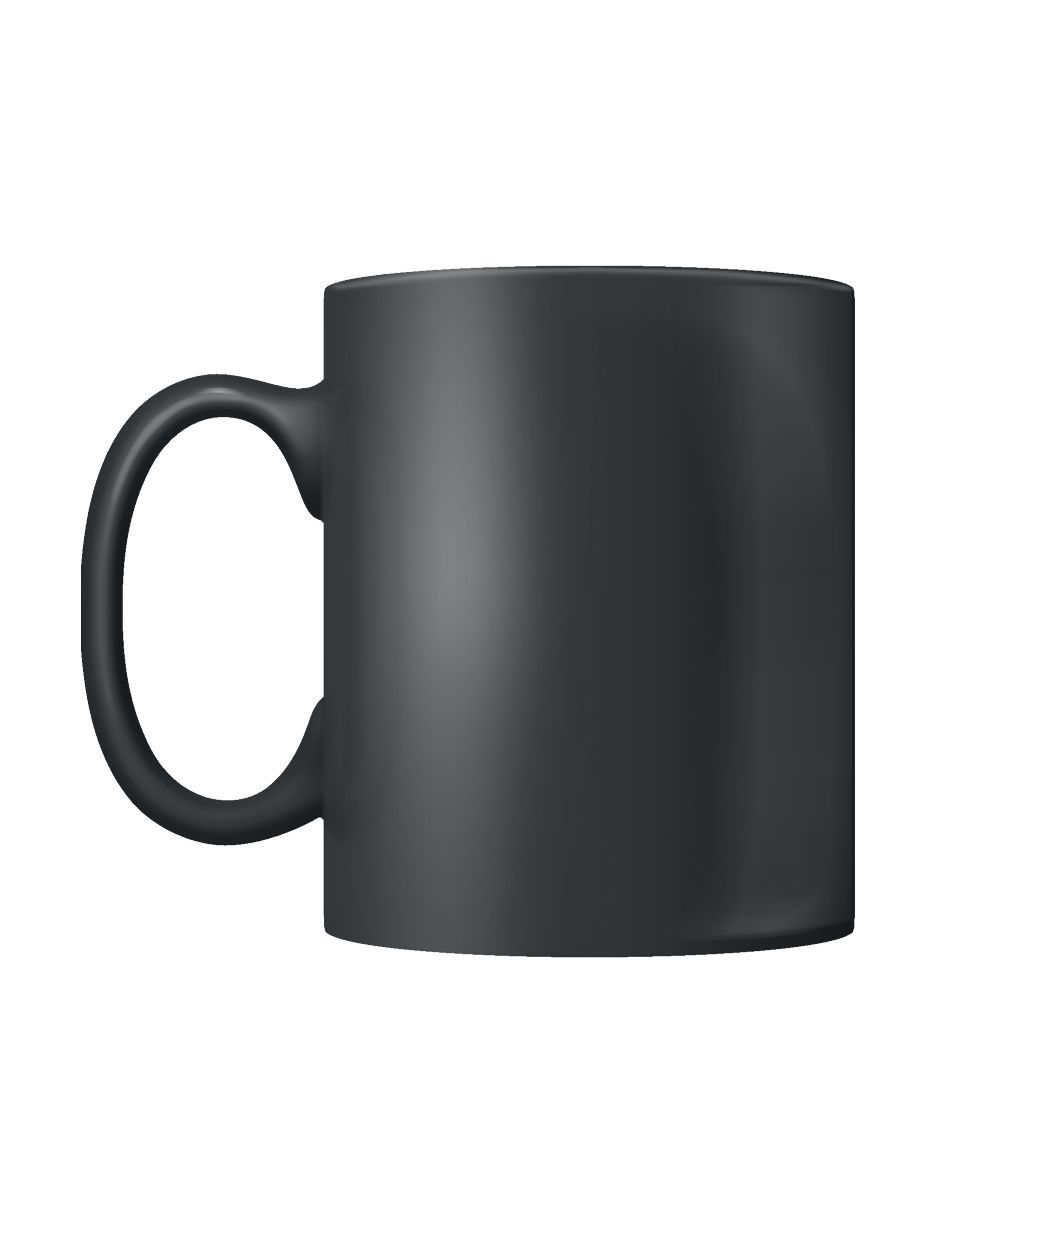 Not Arguing Luffy Mug Valentine Gifts Color Coffee Mug